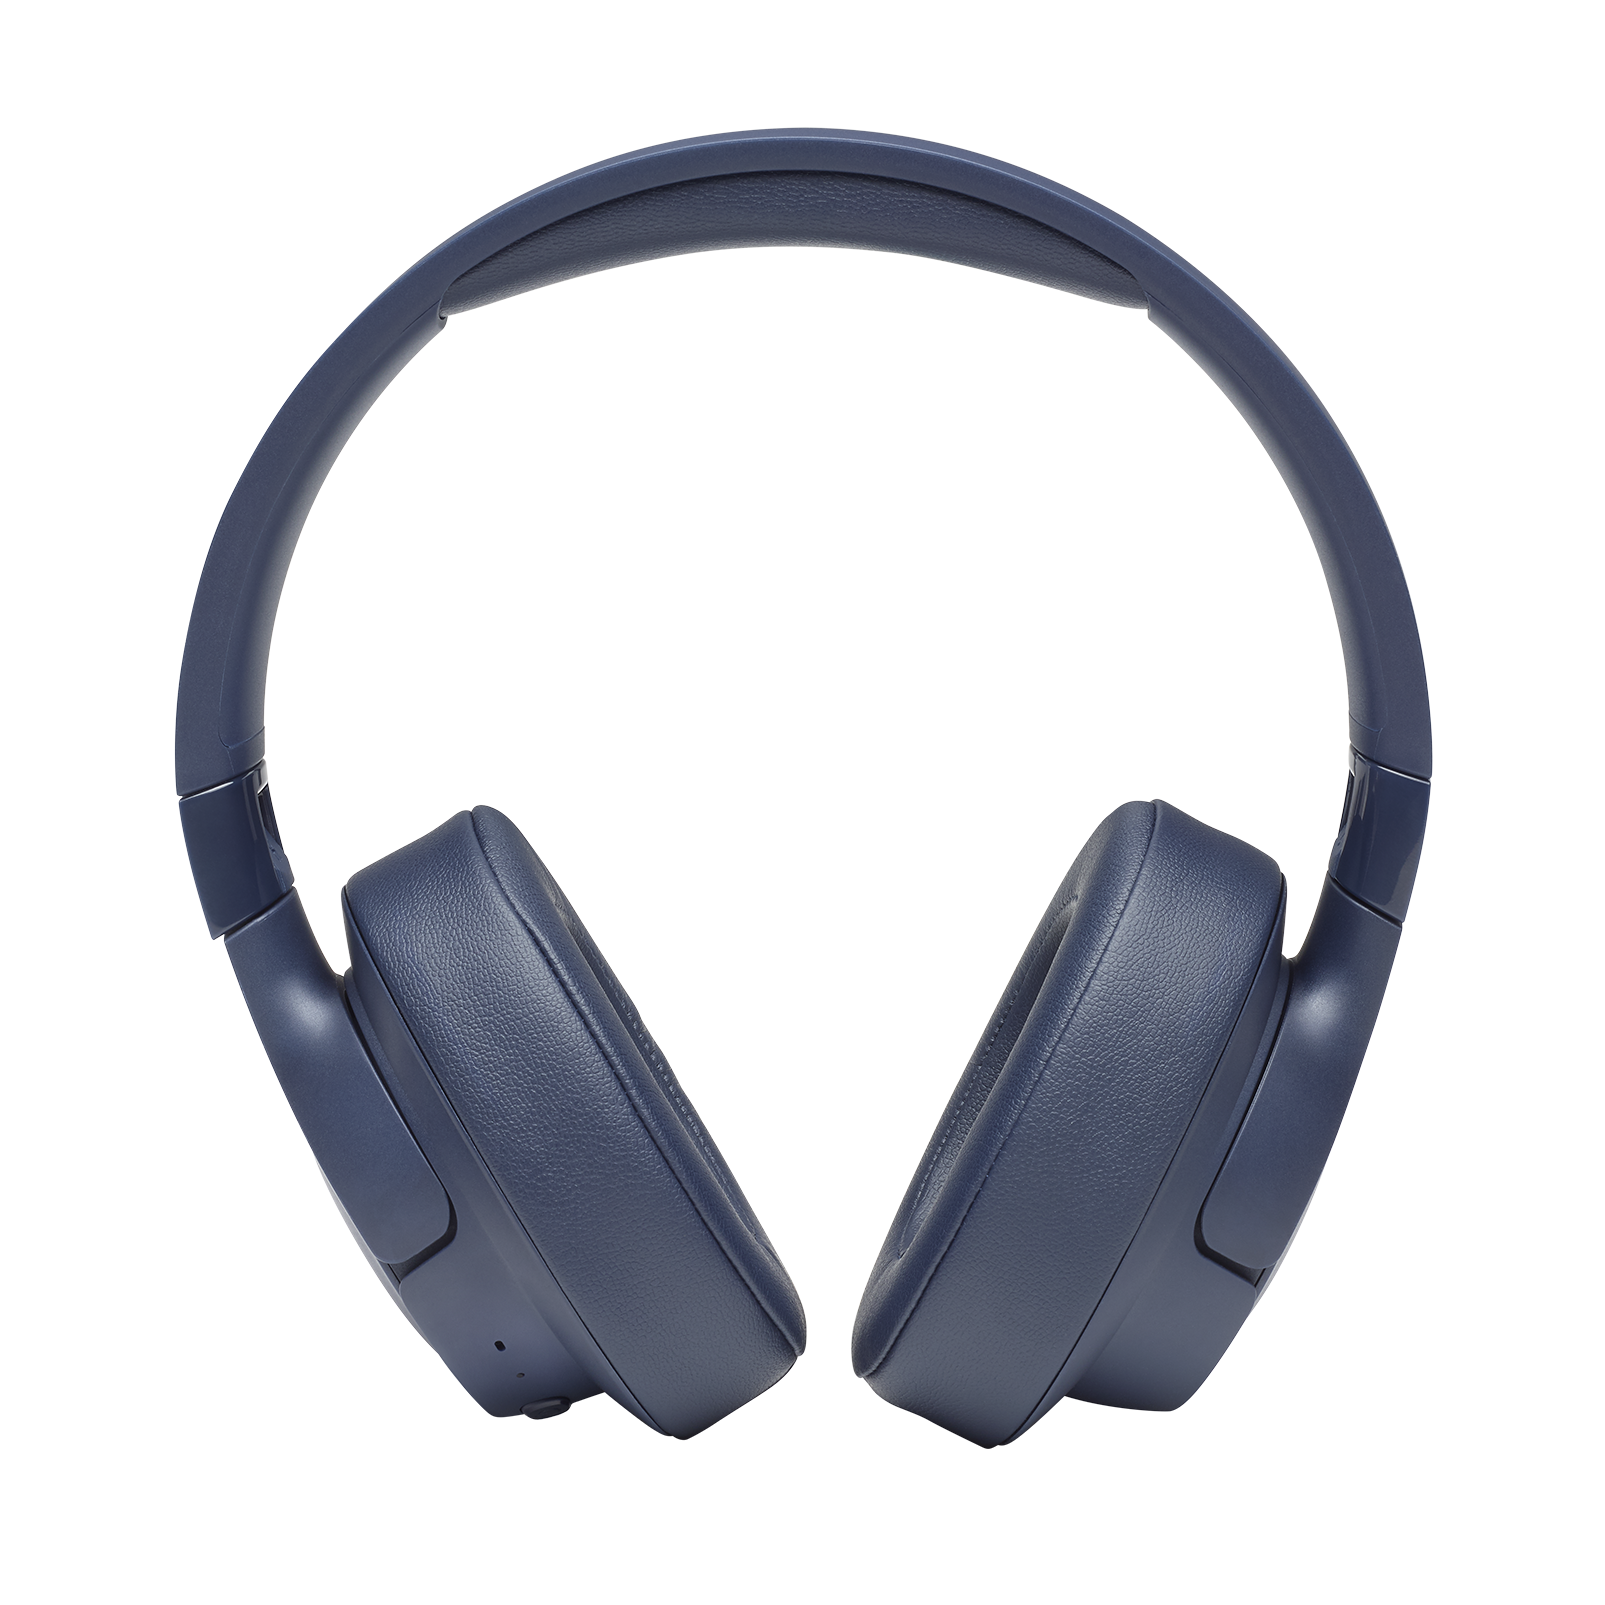 JBL TUNE 700BT - Blue - Wireless Over-Ear Headphones - Front